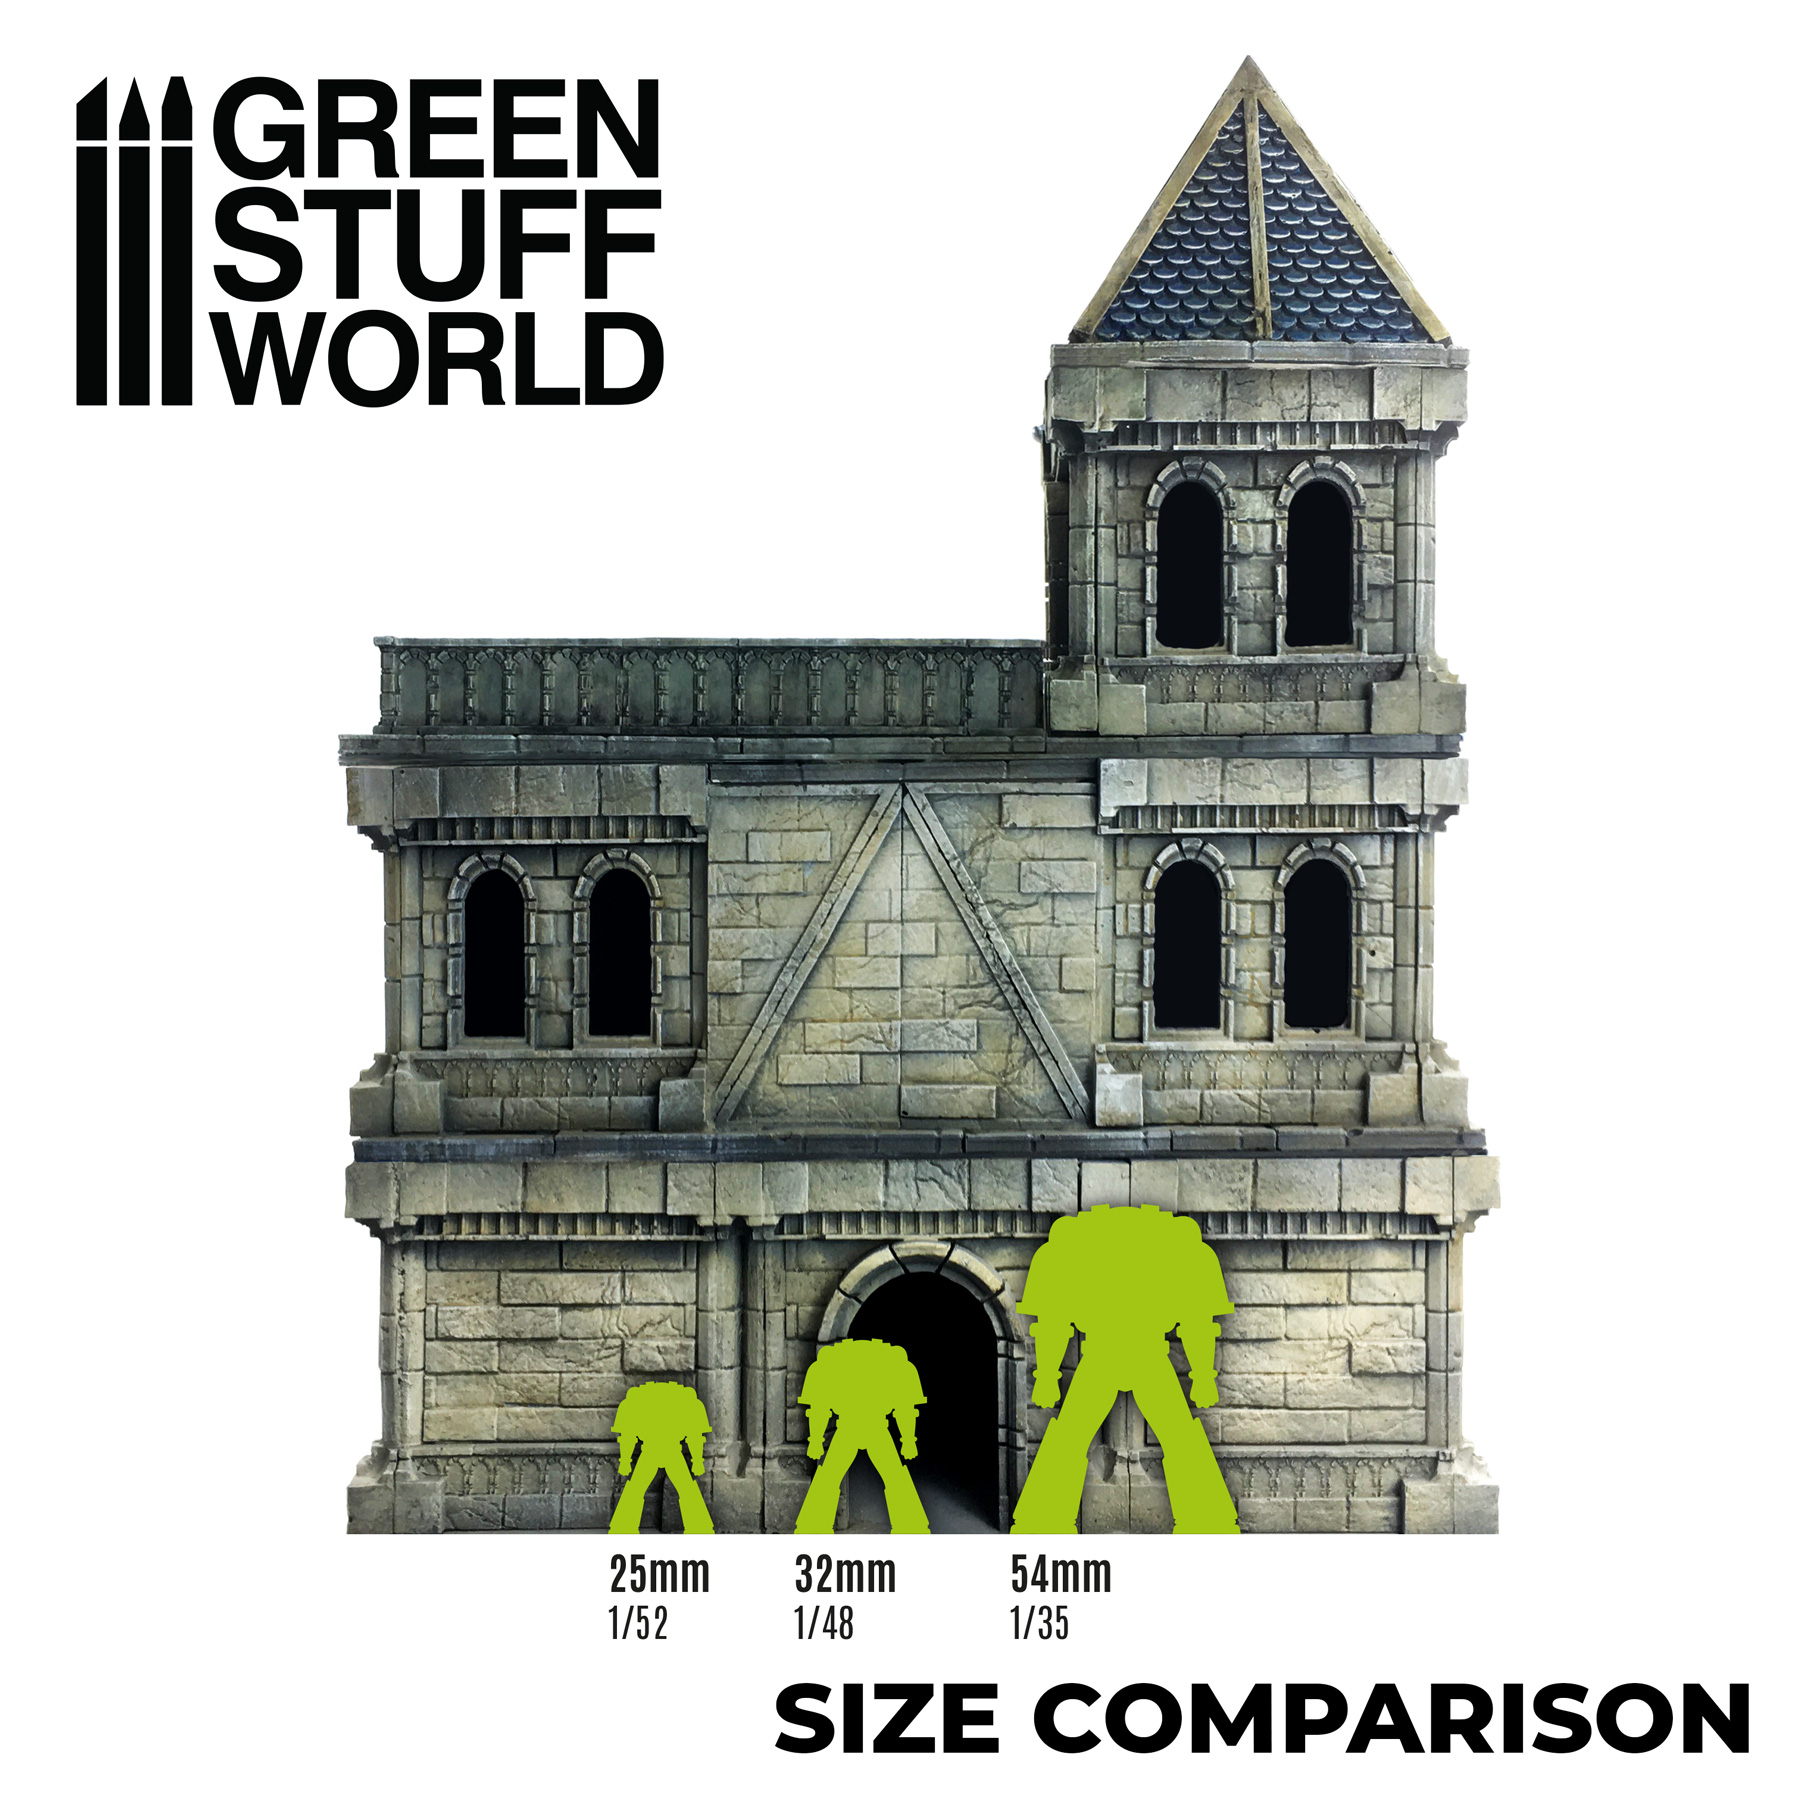 size comparison